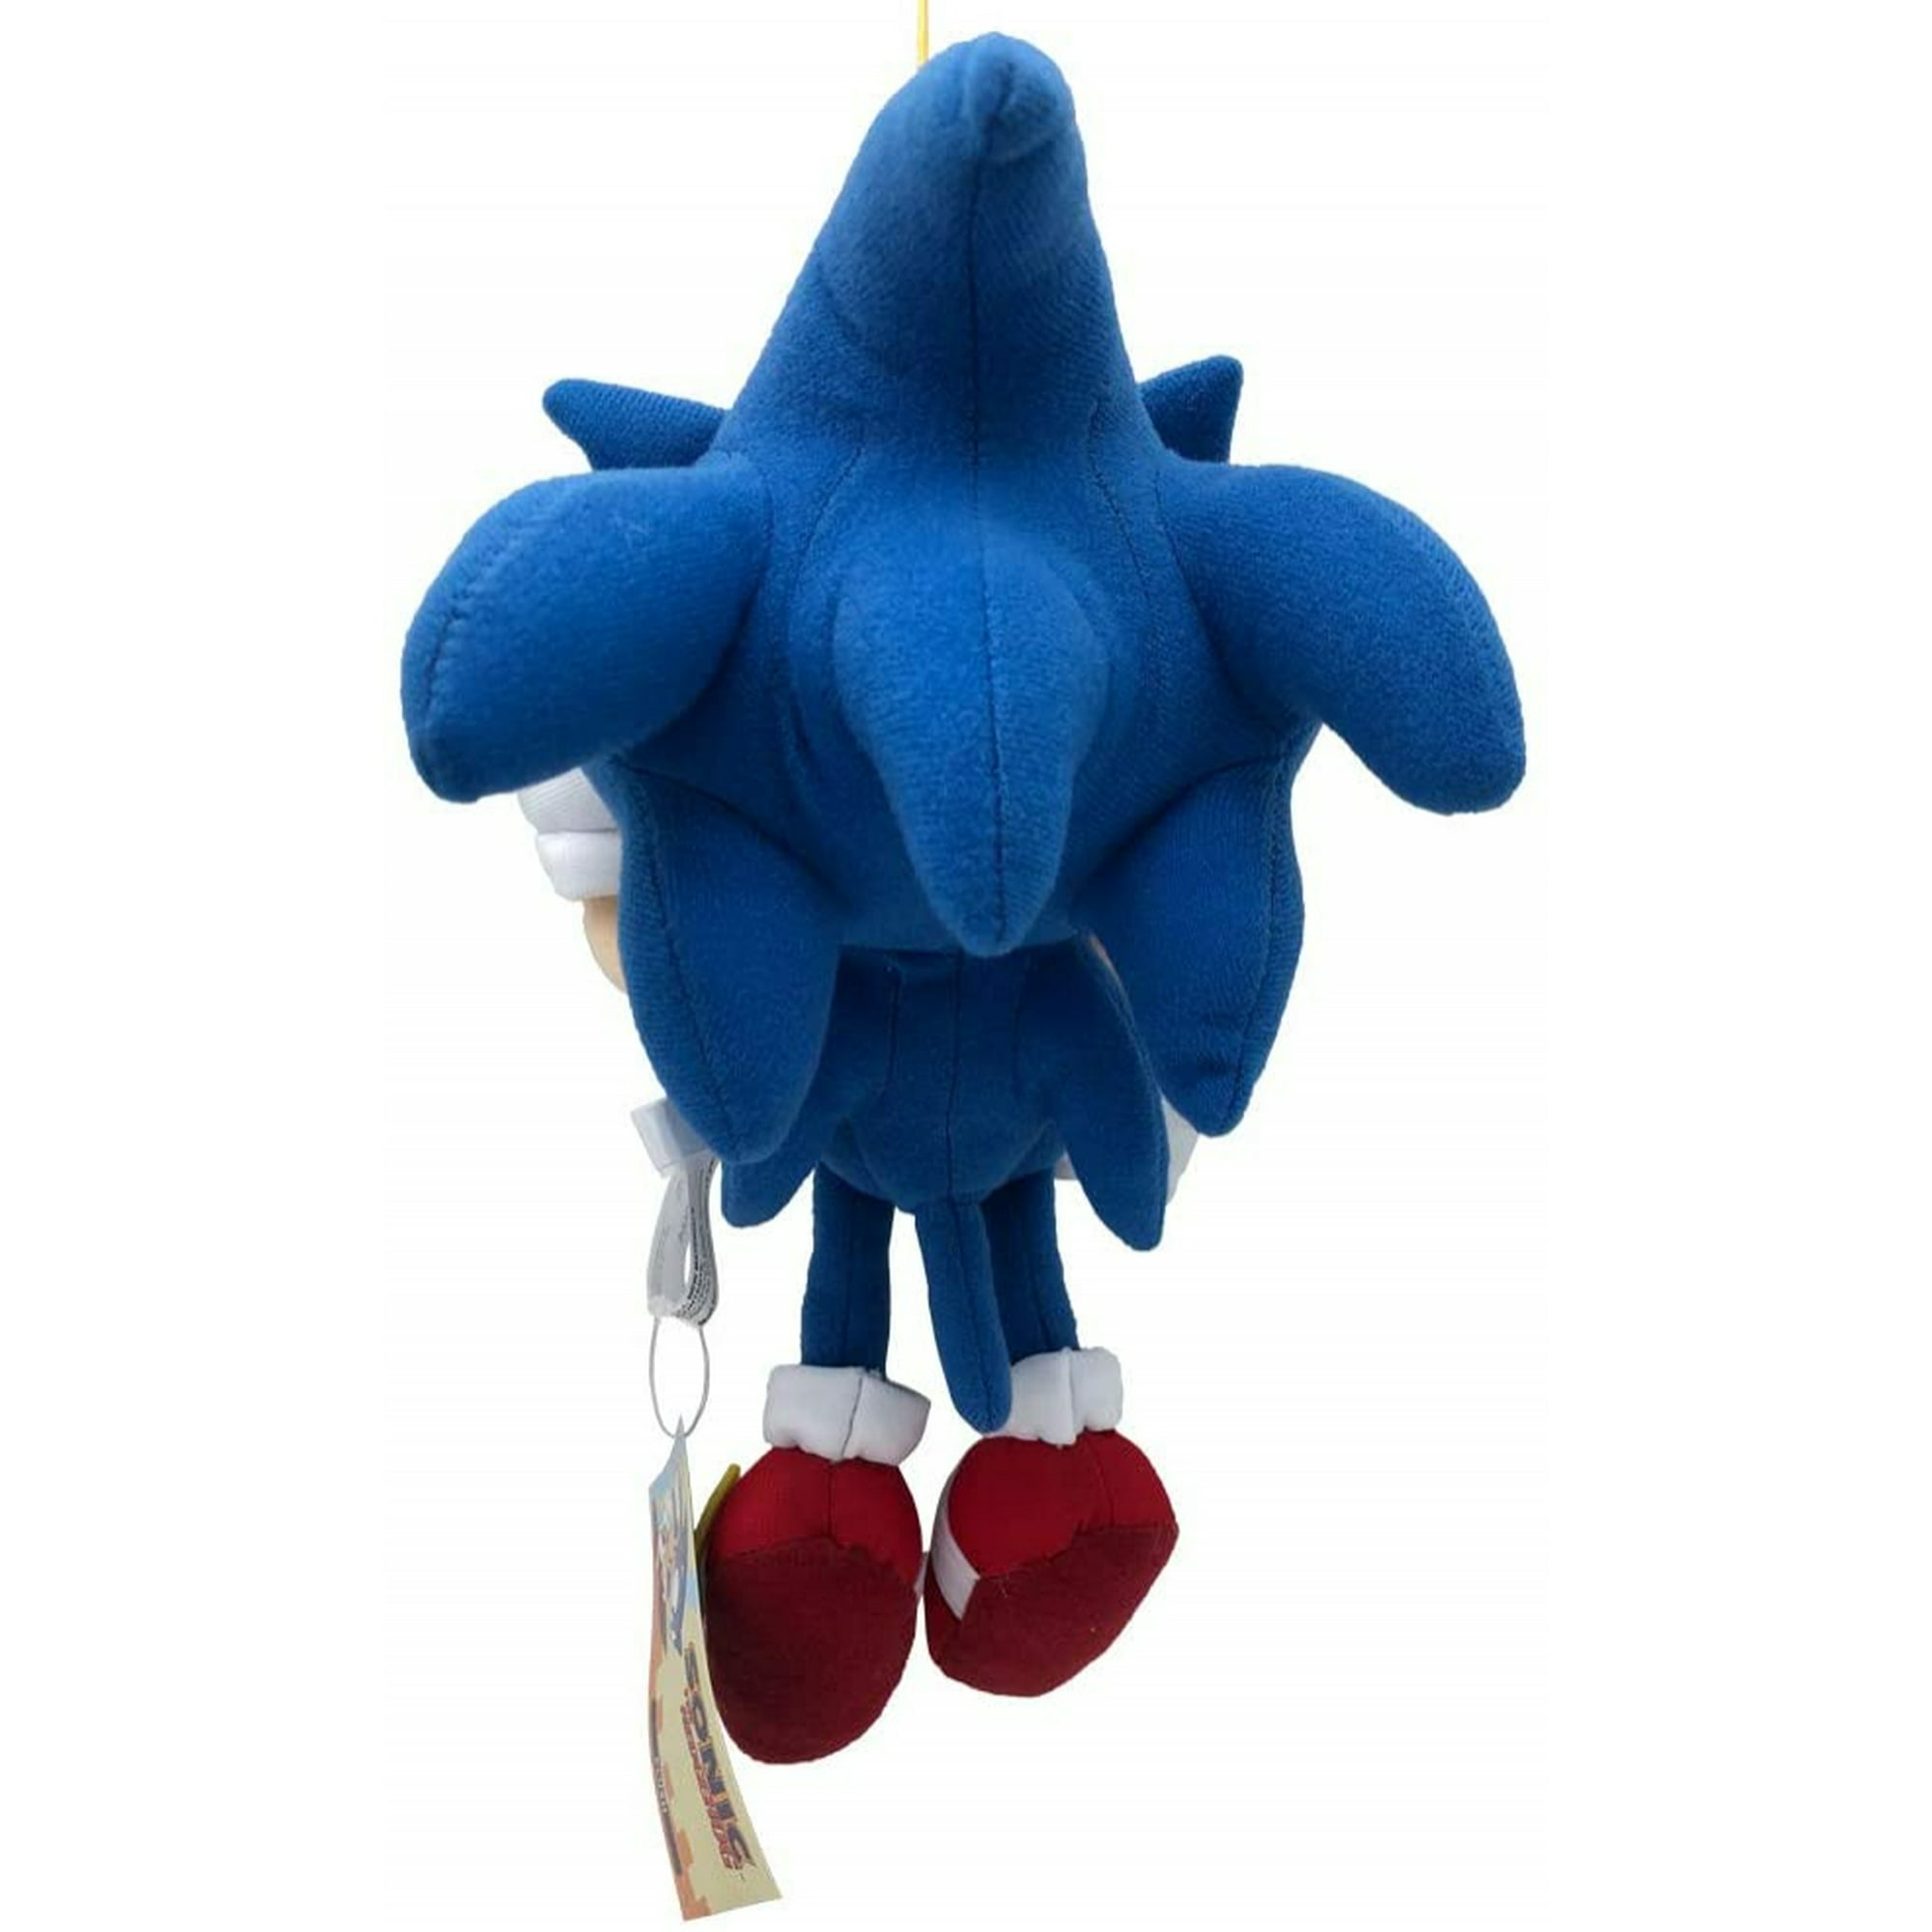 Sonic - Peluche Sonic The Hedgehog Color Azul - 30cm - Calidad Super Soft